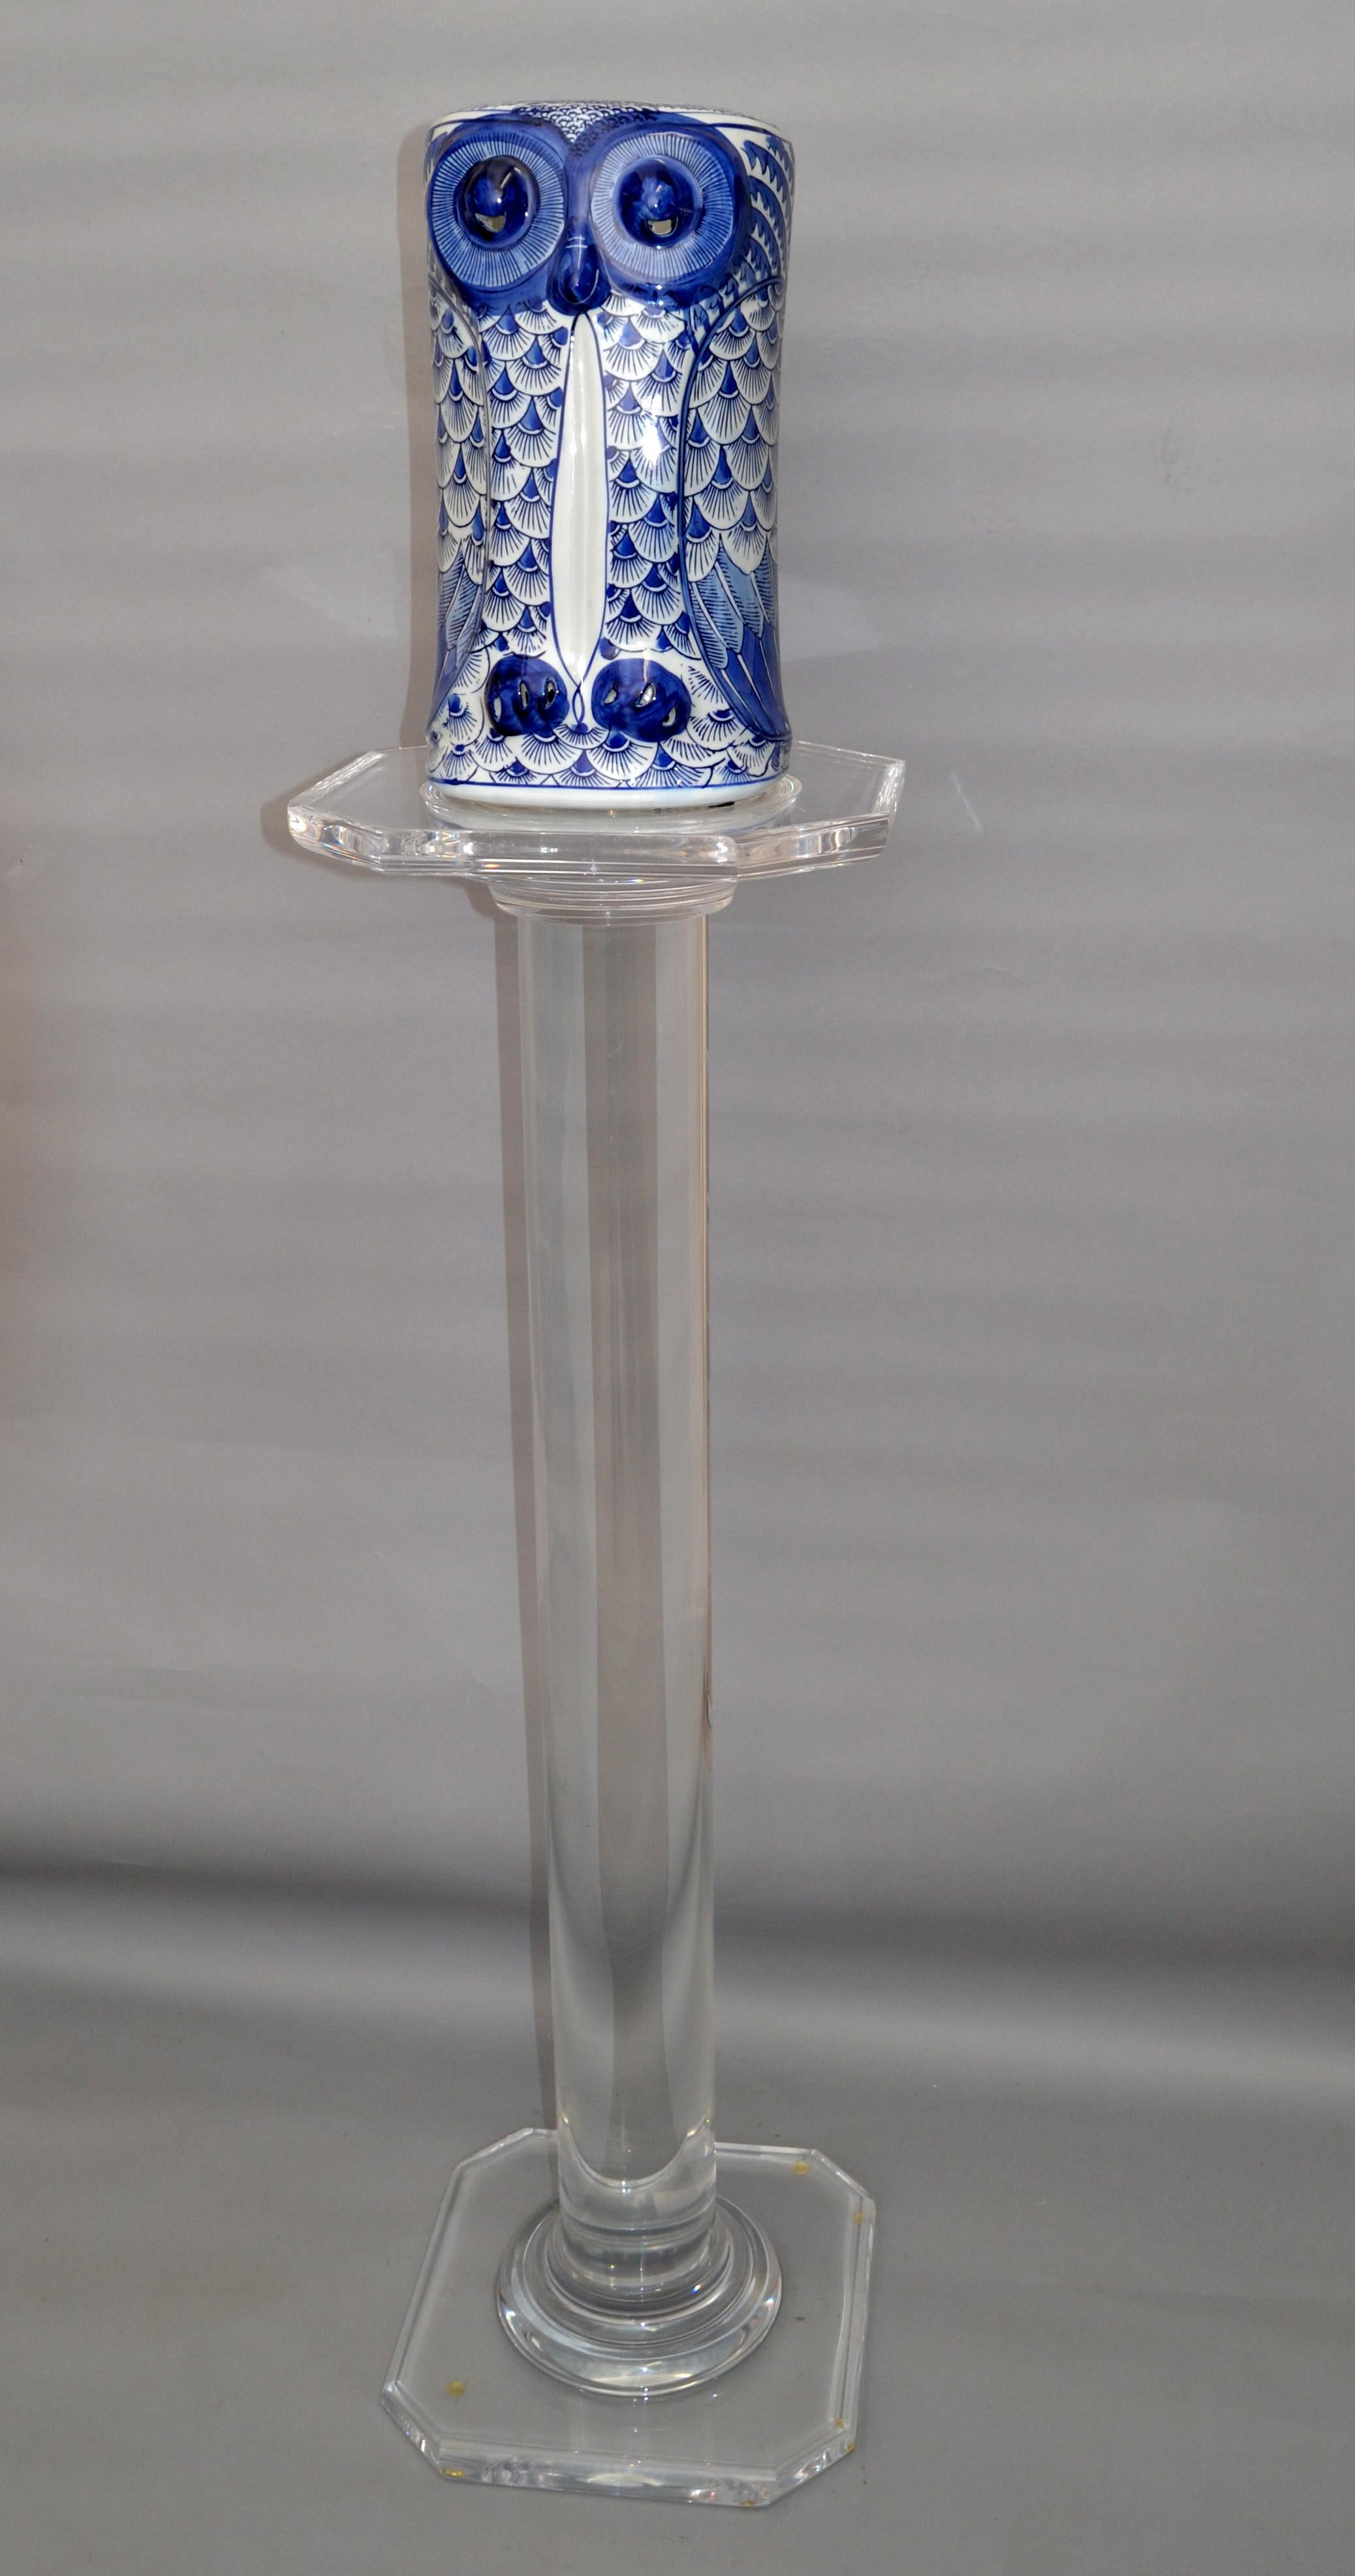 Chinese Blue Grey Handmade Ceramic Pottery Owl Planter Vase Umbrella Stand For Sale 1